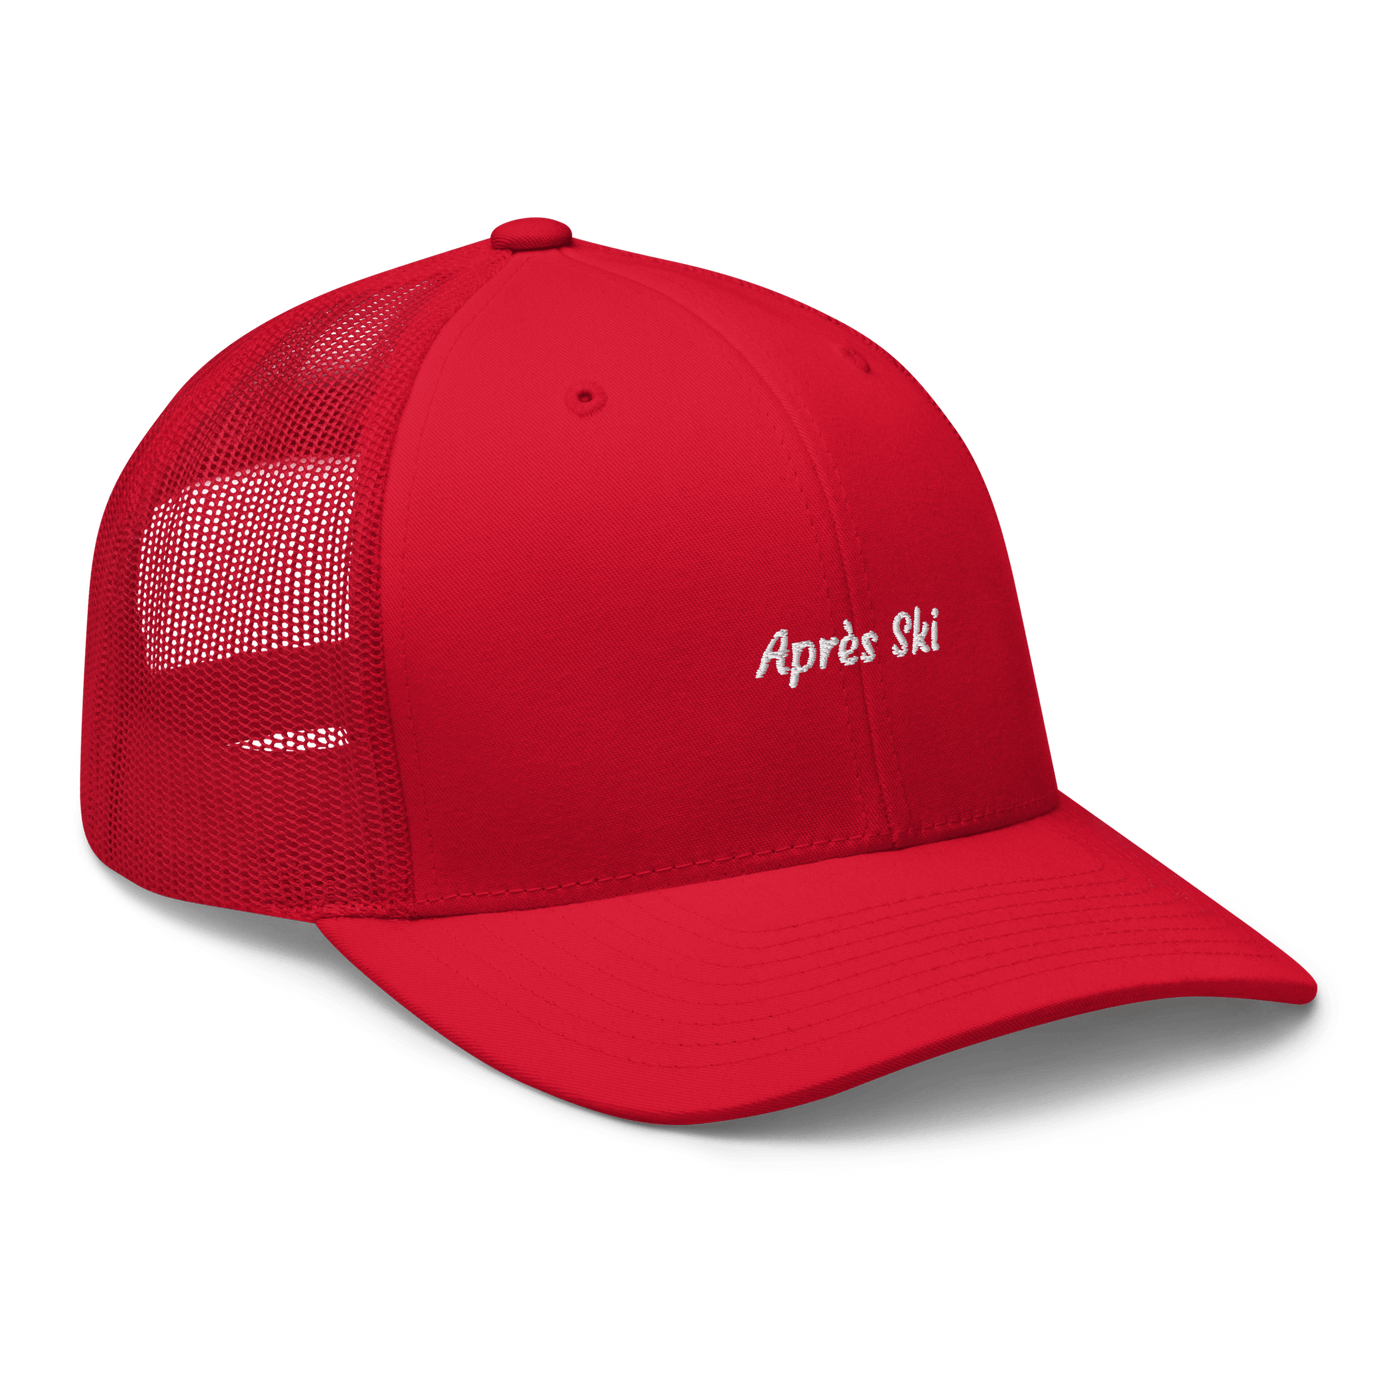 Après Ski Trucker Cap - Red - - Just Another Cap Store